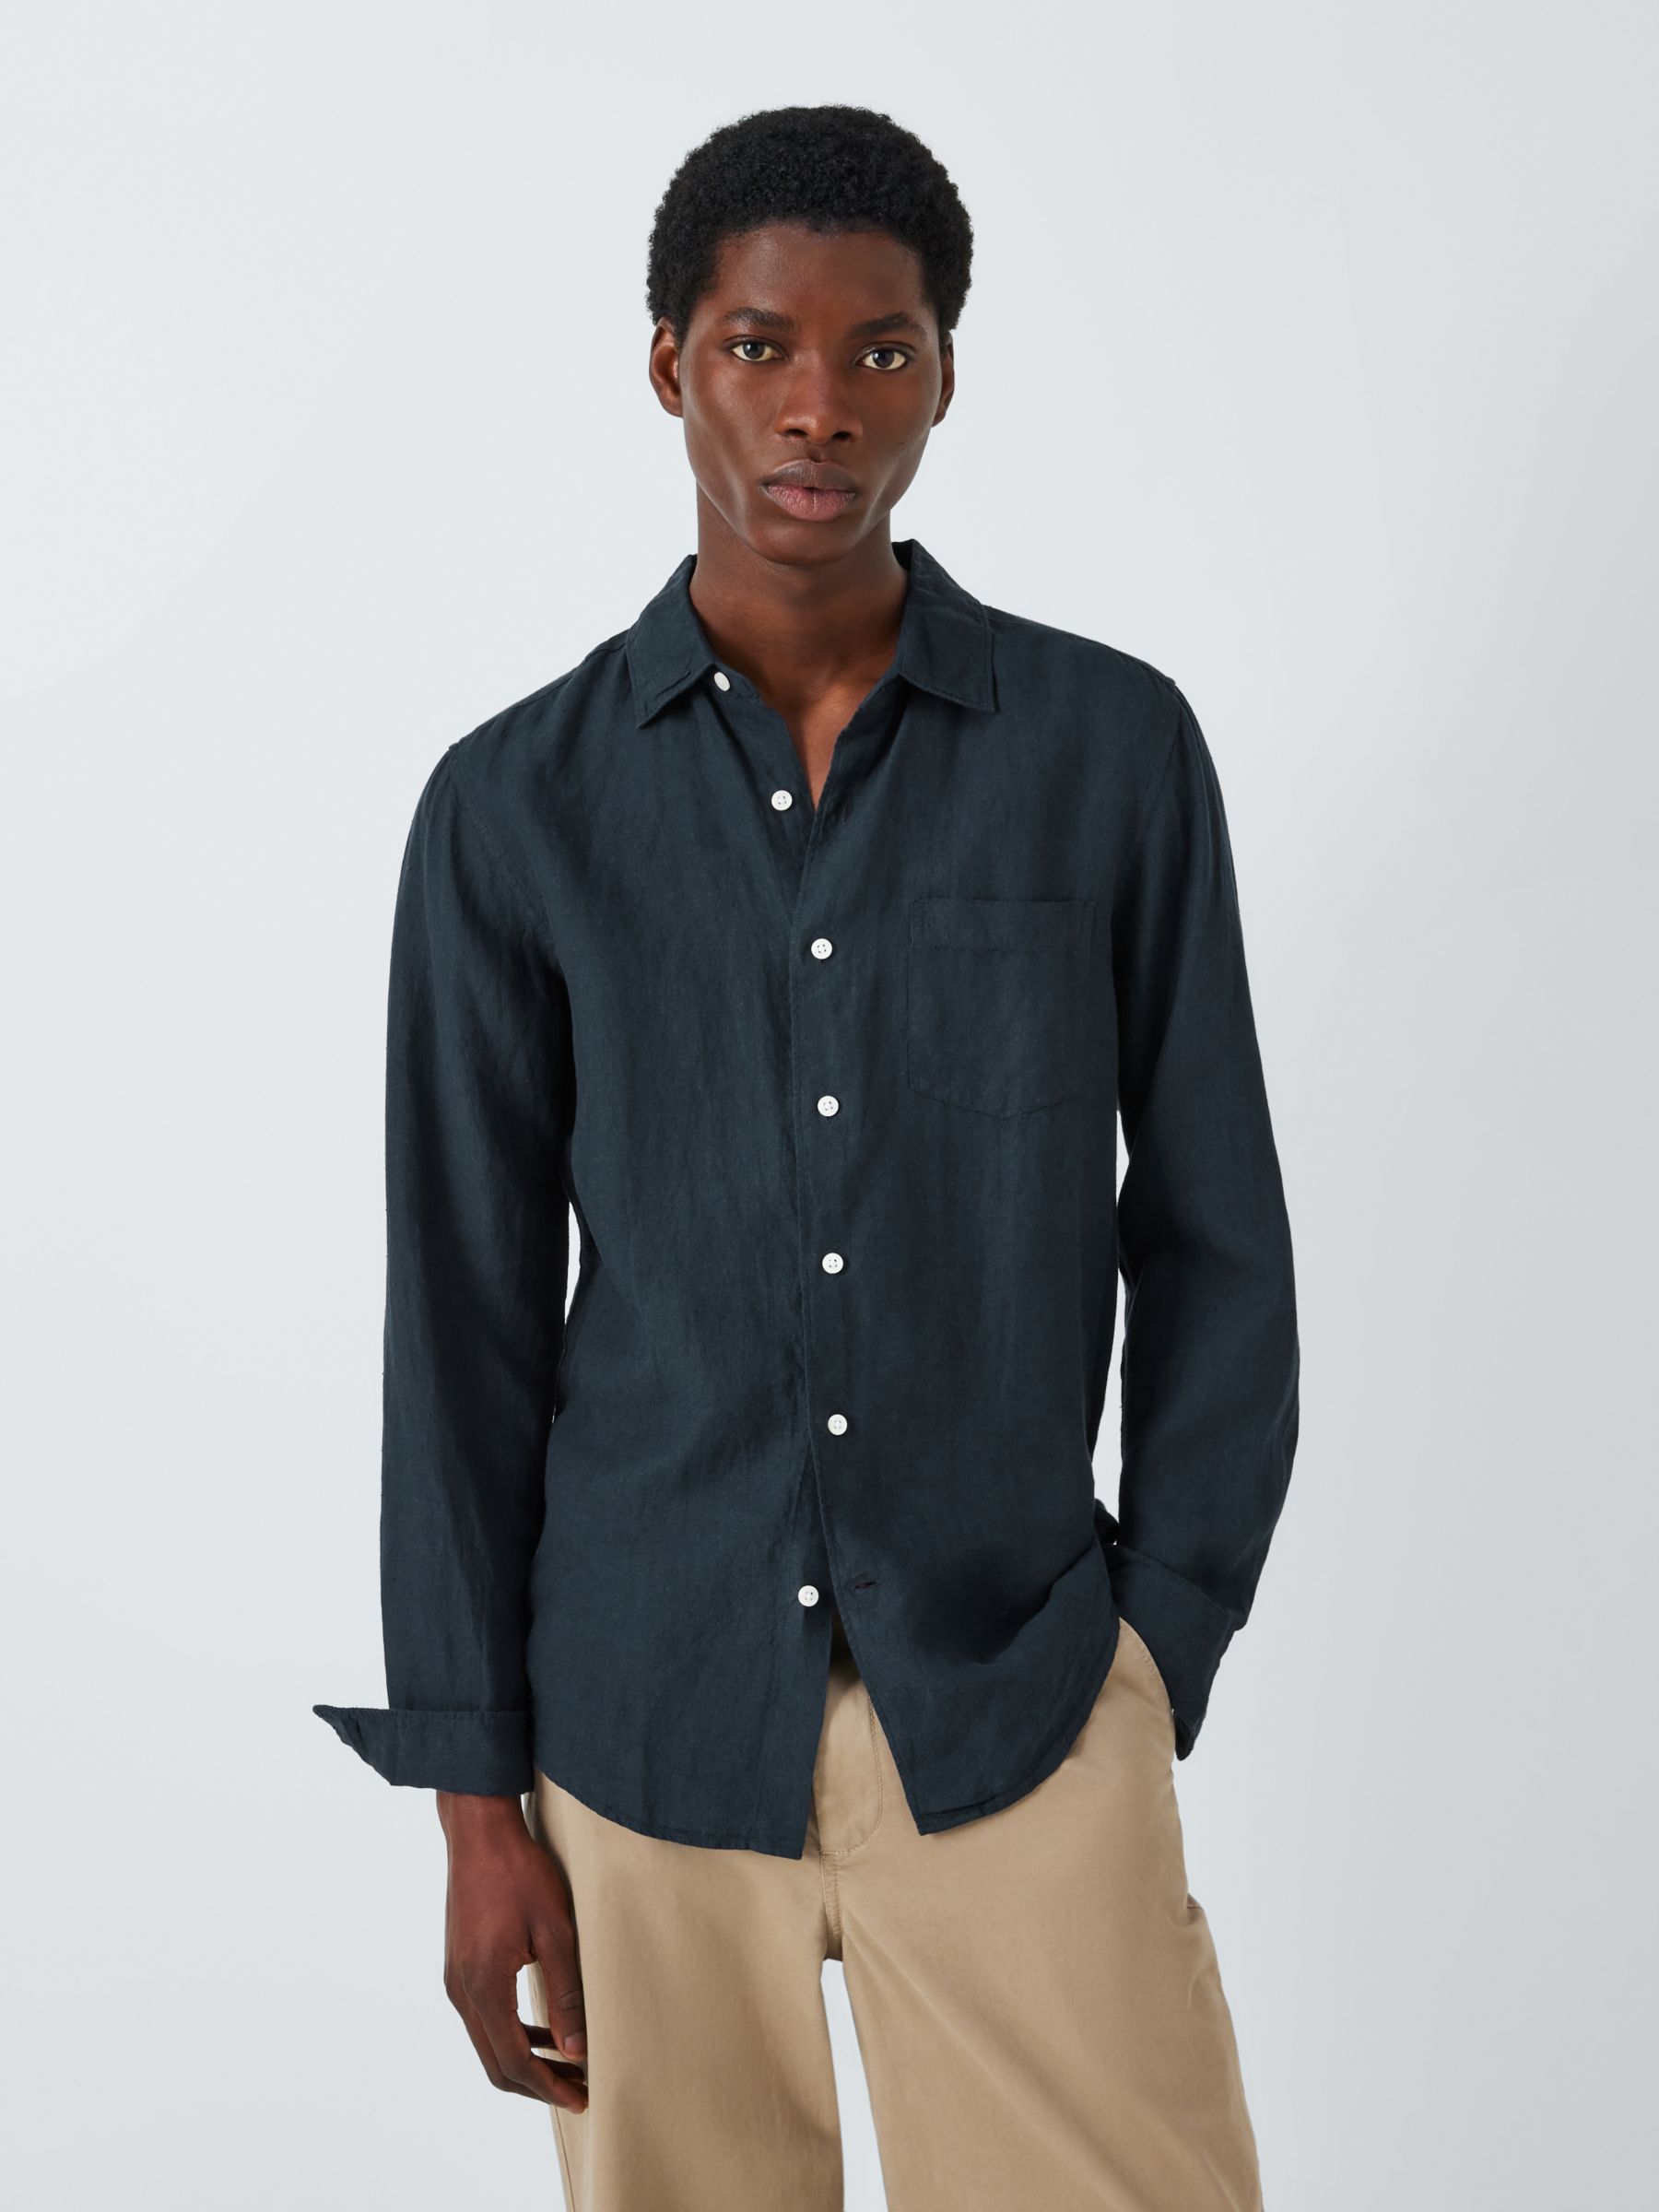 John Lewis Linen Regular Fit Shirt, Navy at John Lewis & Partners